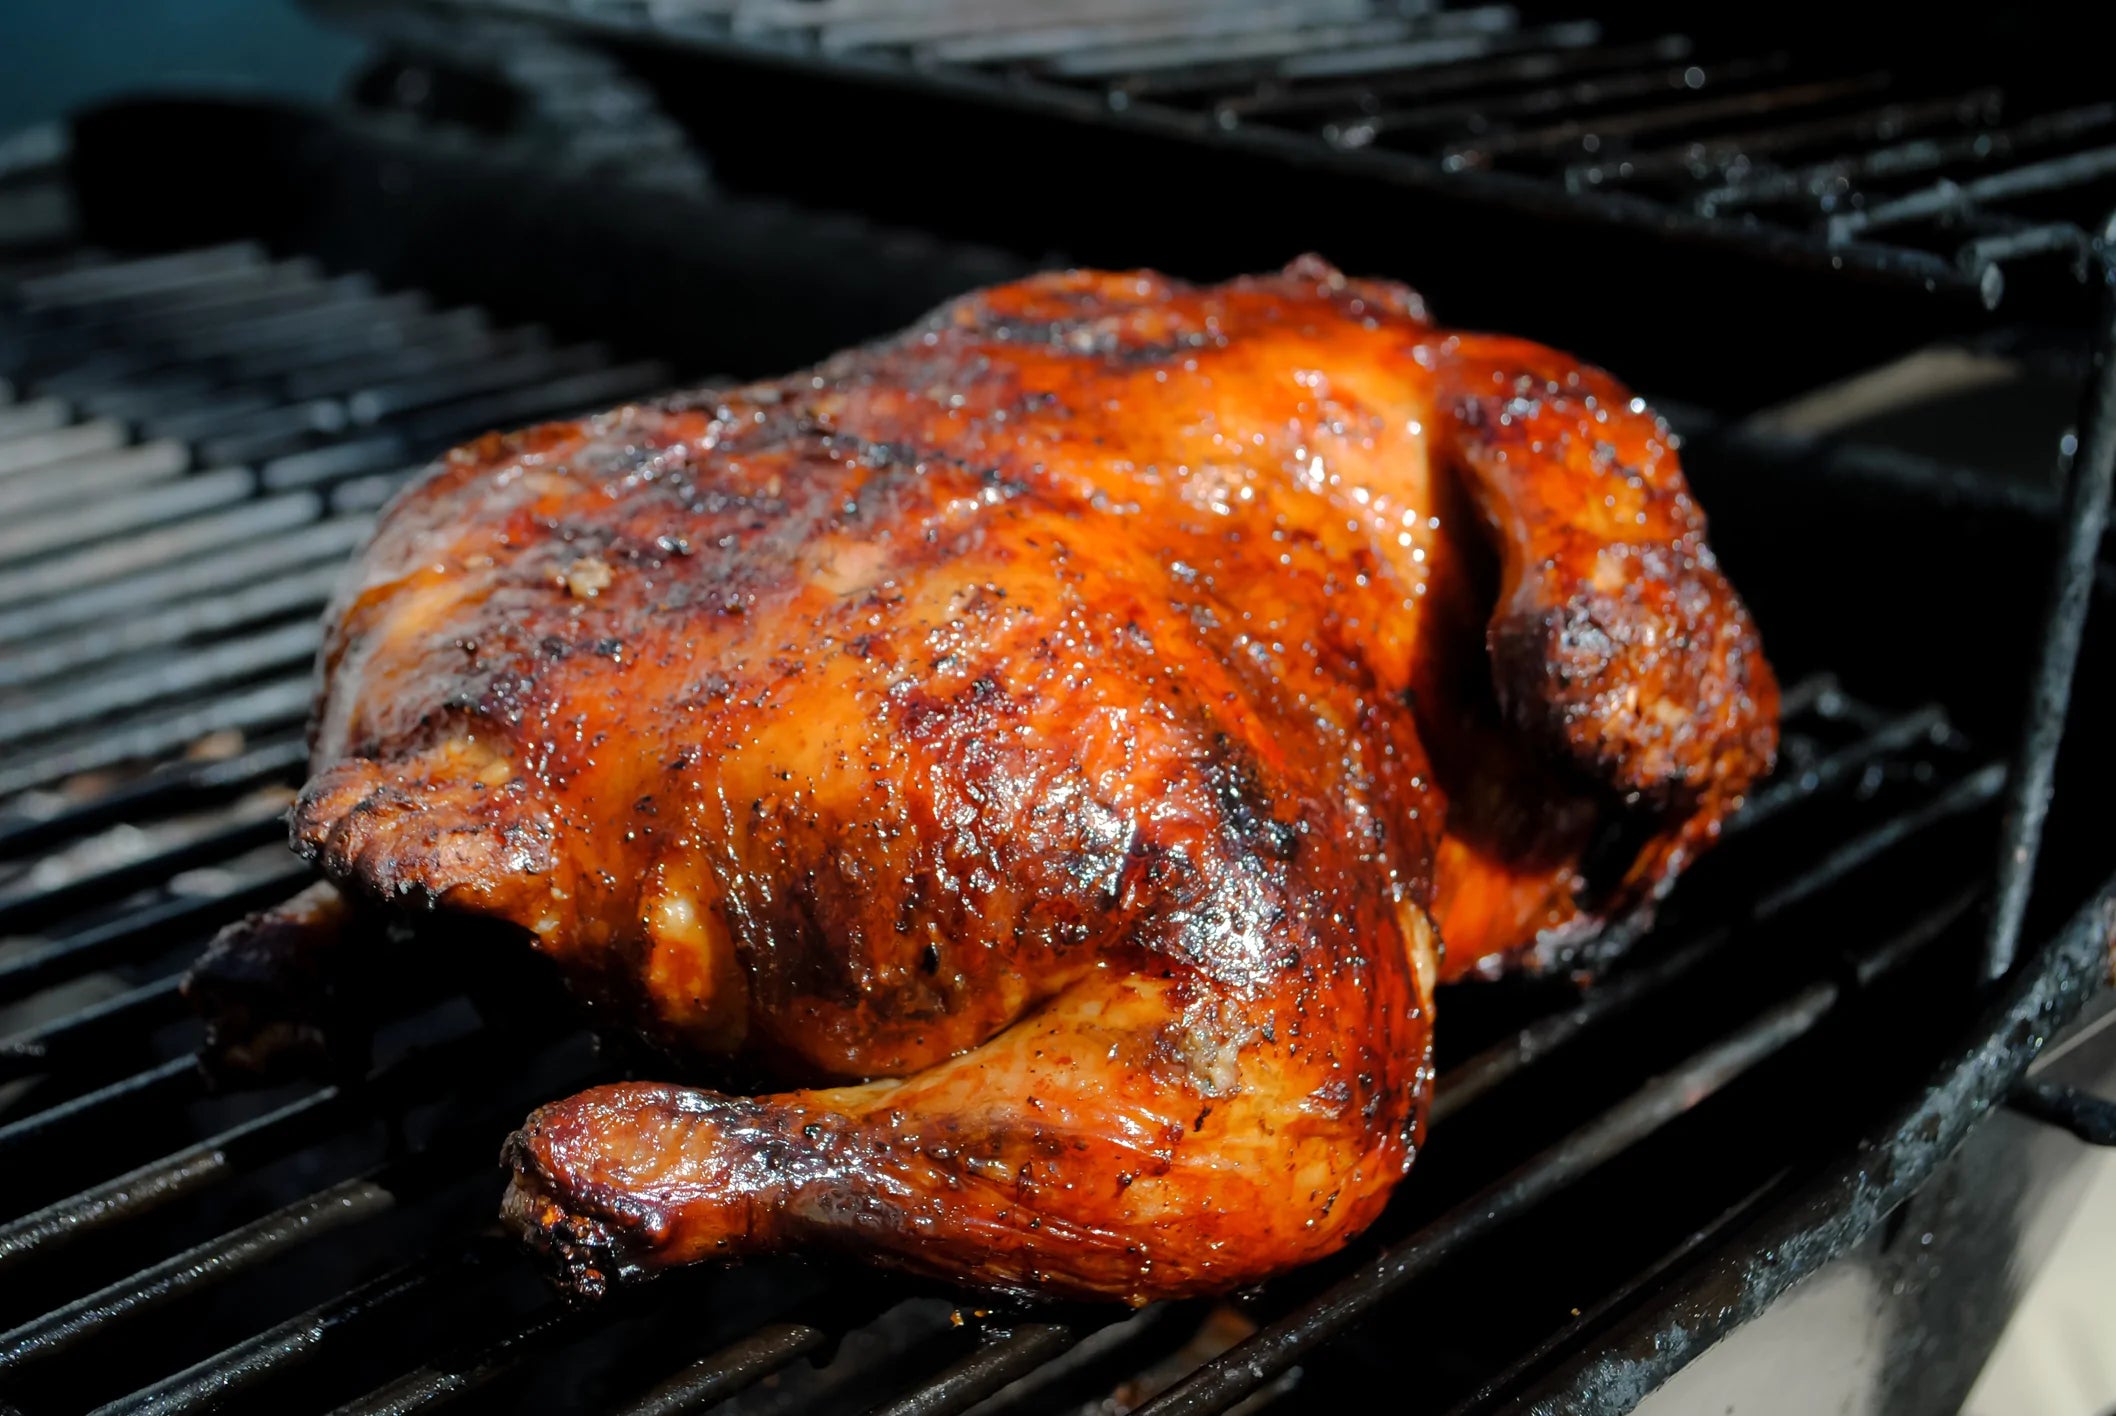 Montreal Flattened Chicken 2.6 lbs - VG Meats - Frozen